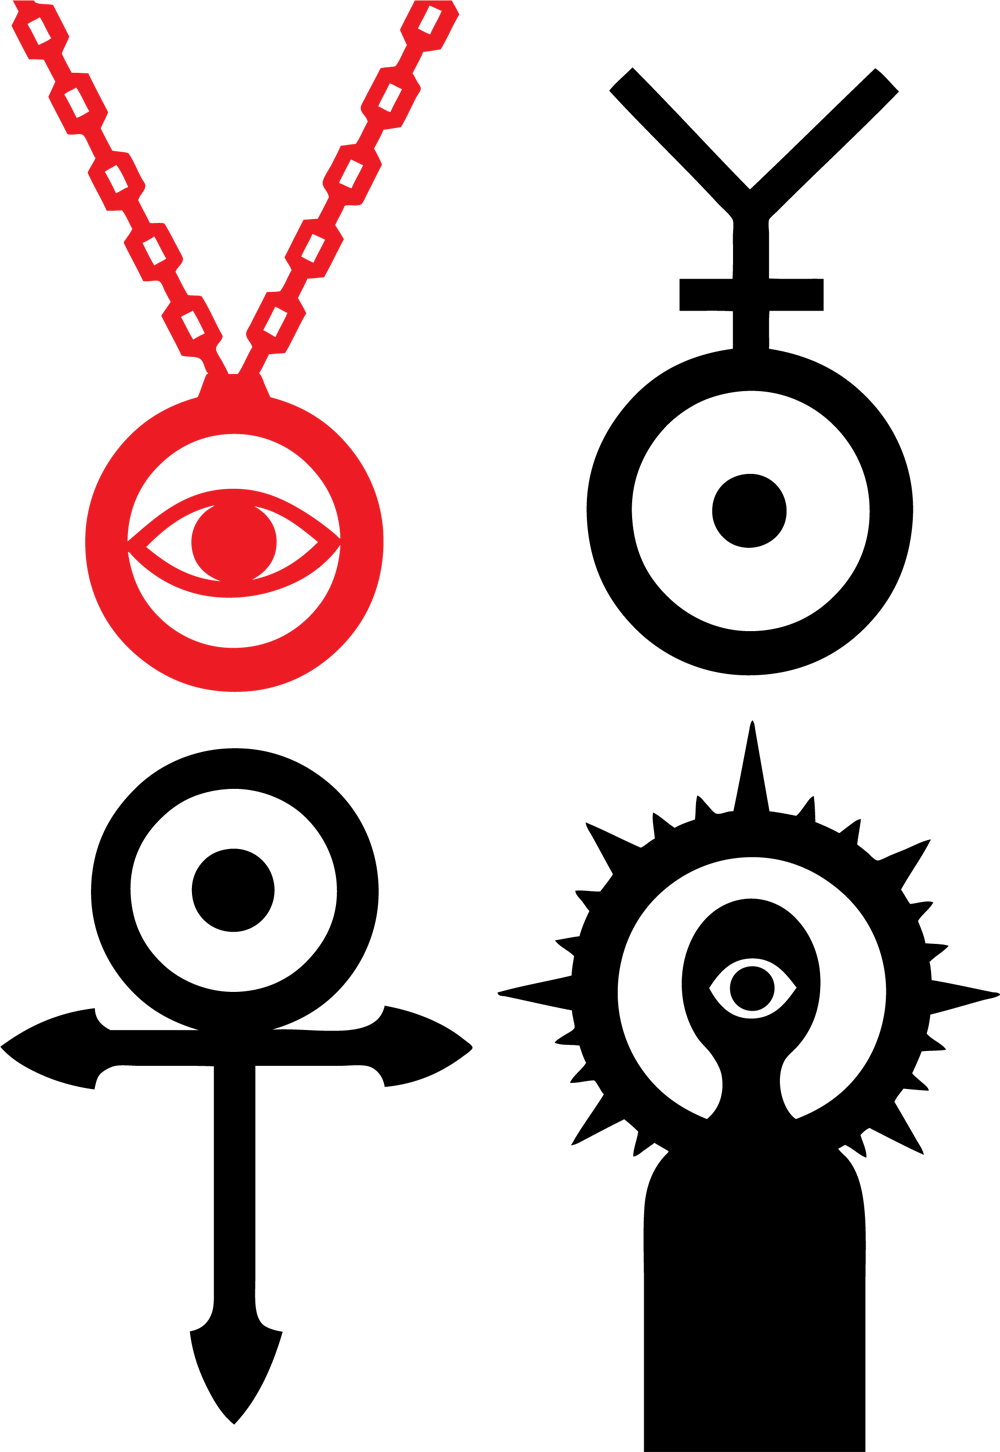 His Clockwork Servants — SCP Foundation fanart, logo design for